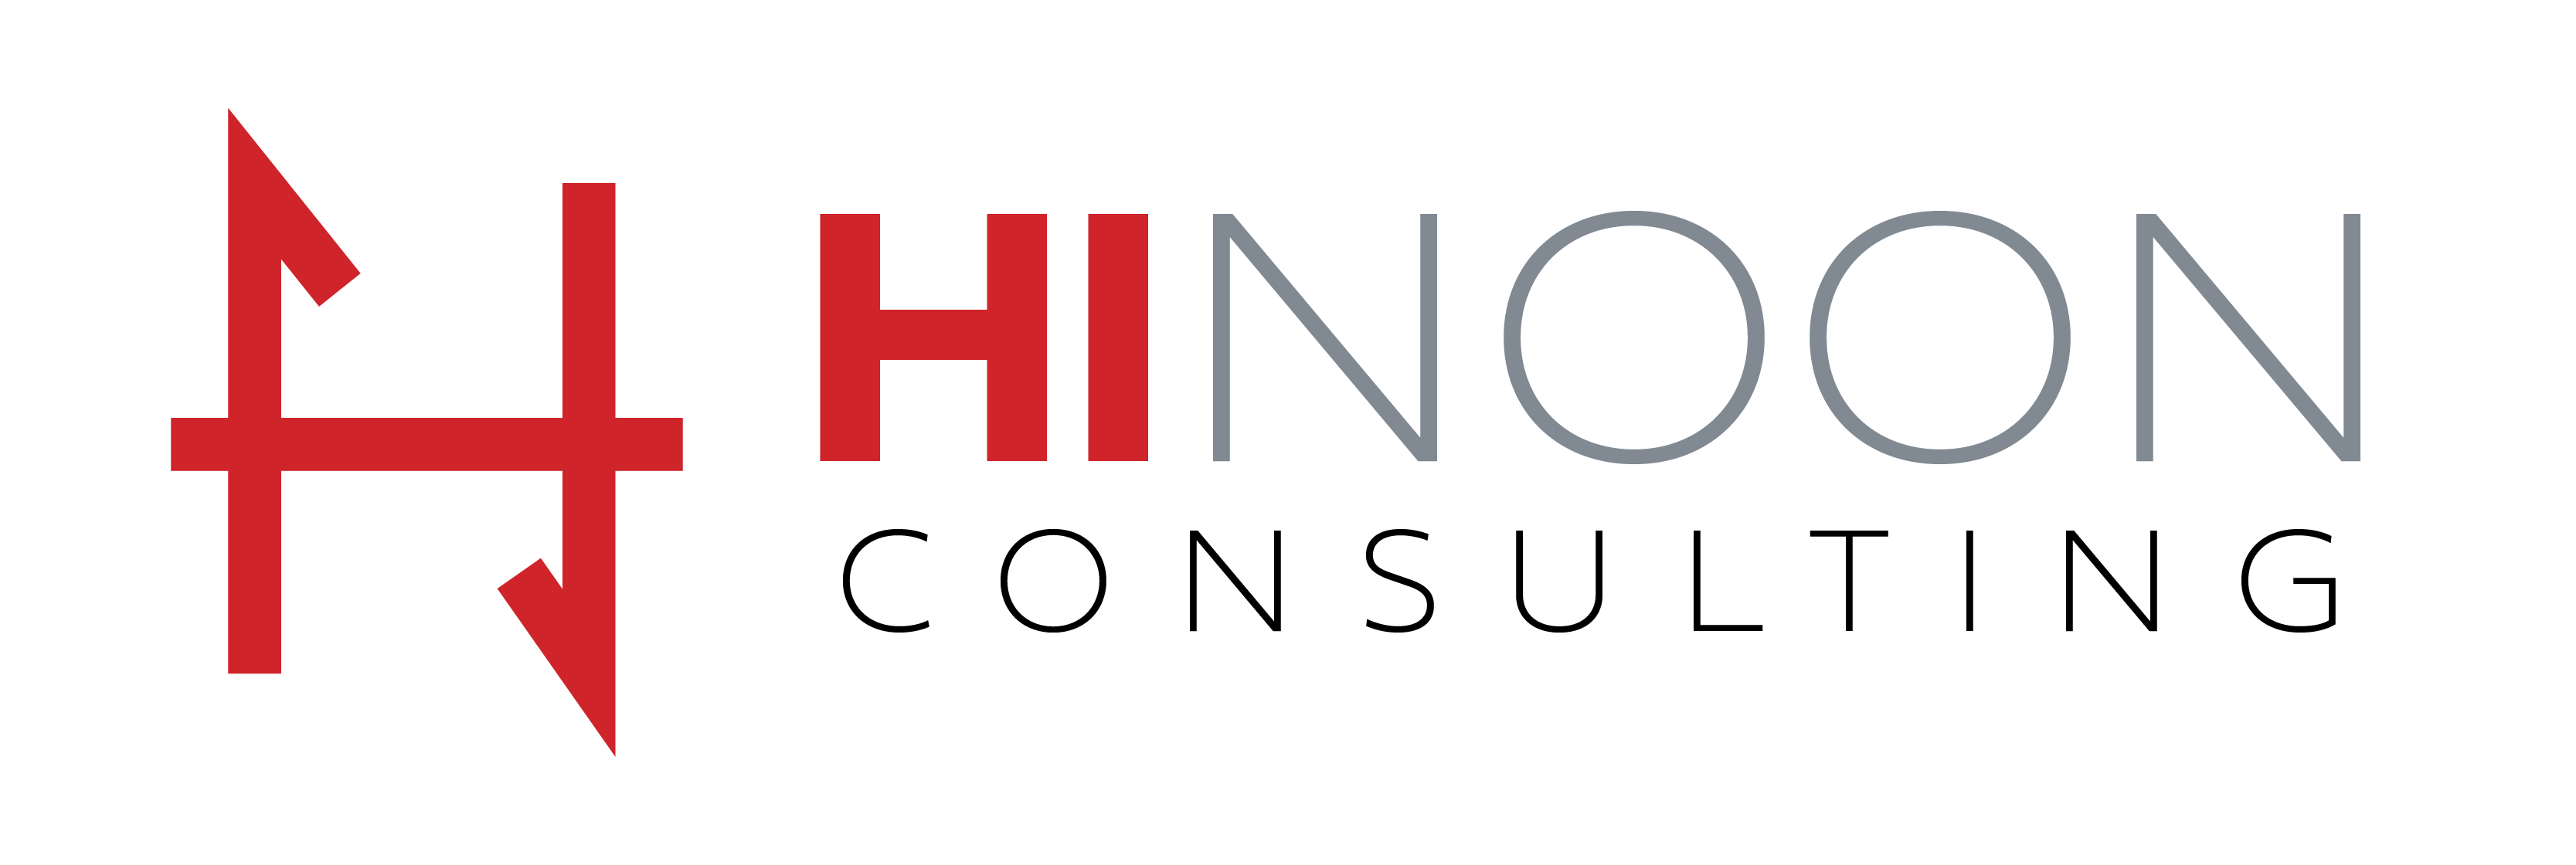 HiNoon Consulting, LLC